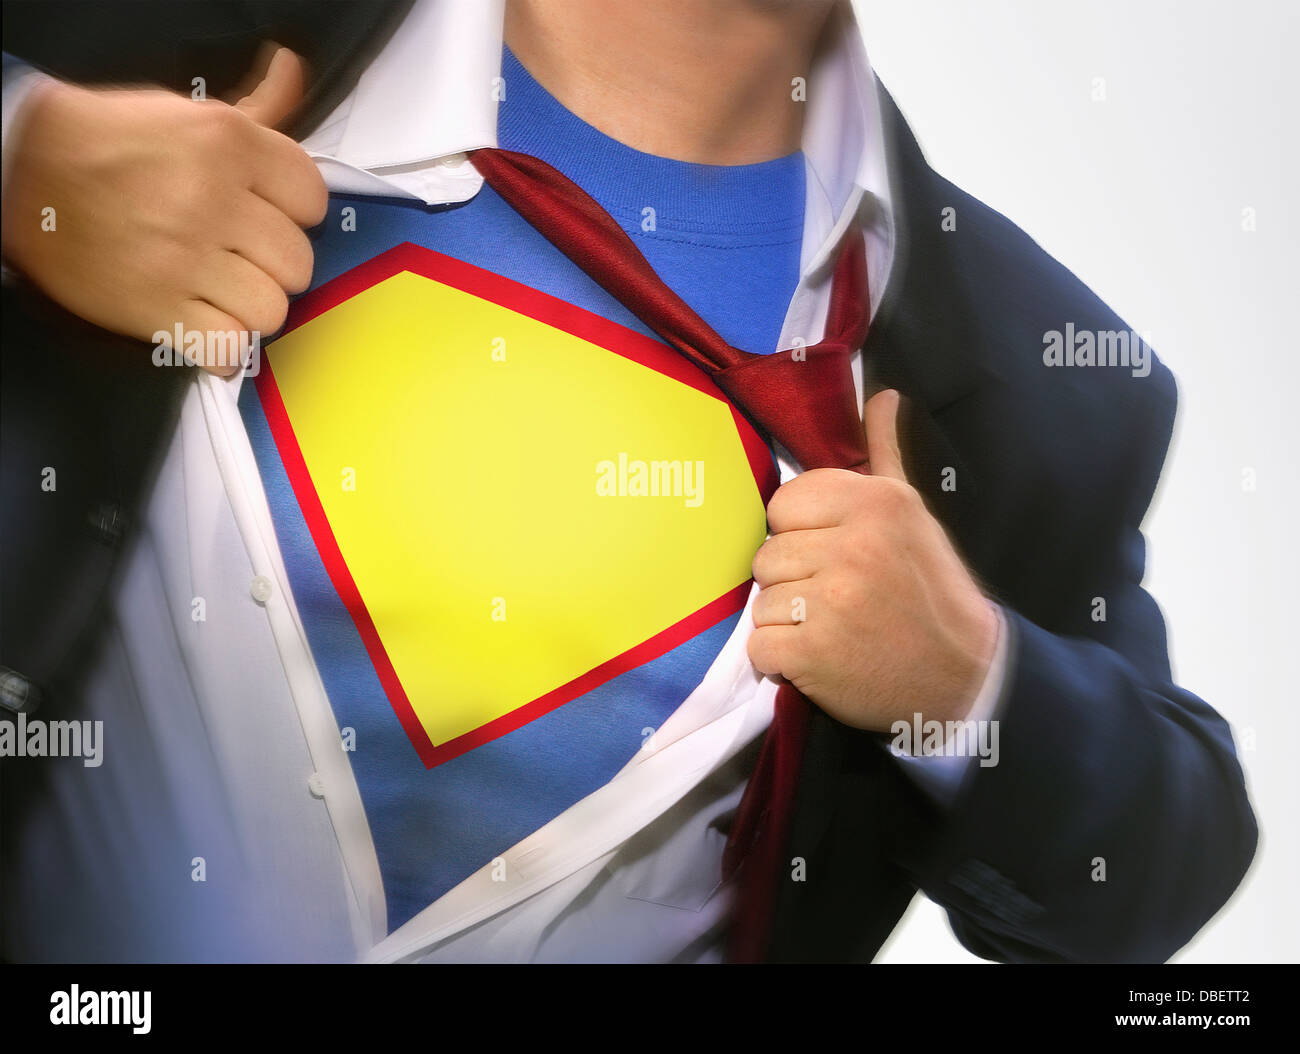 Businessman wearing superhero costume Stock Photo